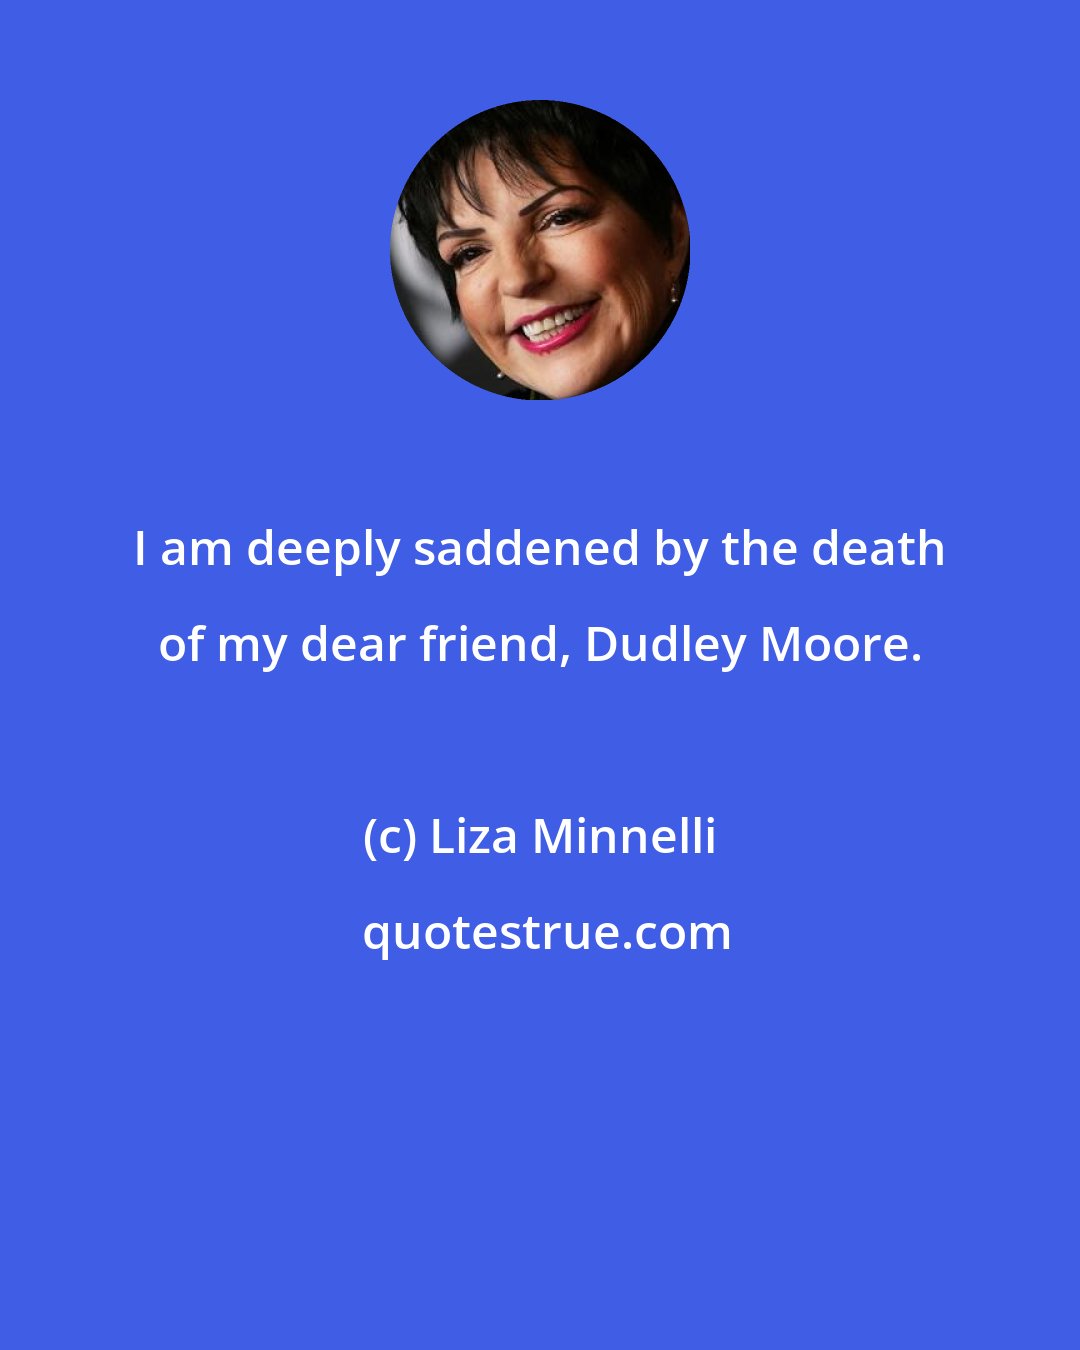 Liza Minnelli: I am deeply saddened by the death of my dear friend, Dudley Moore.